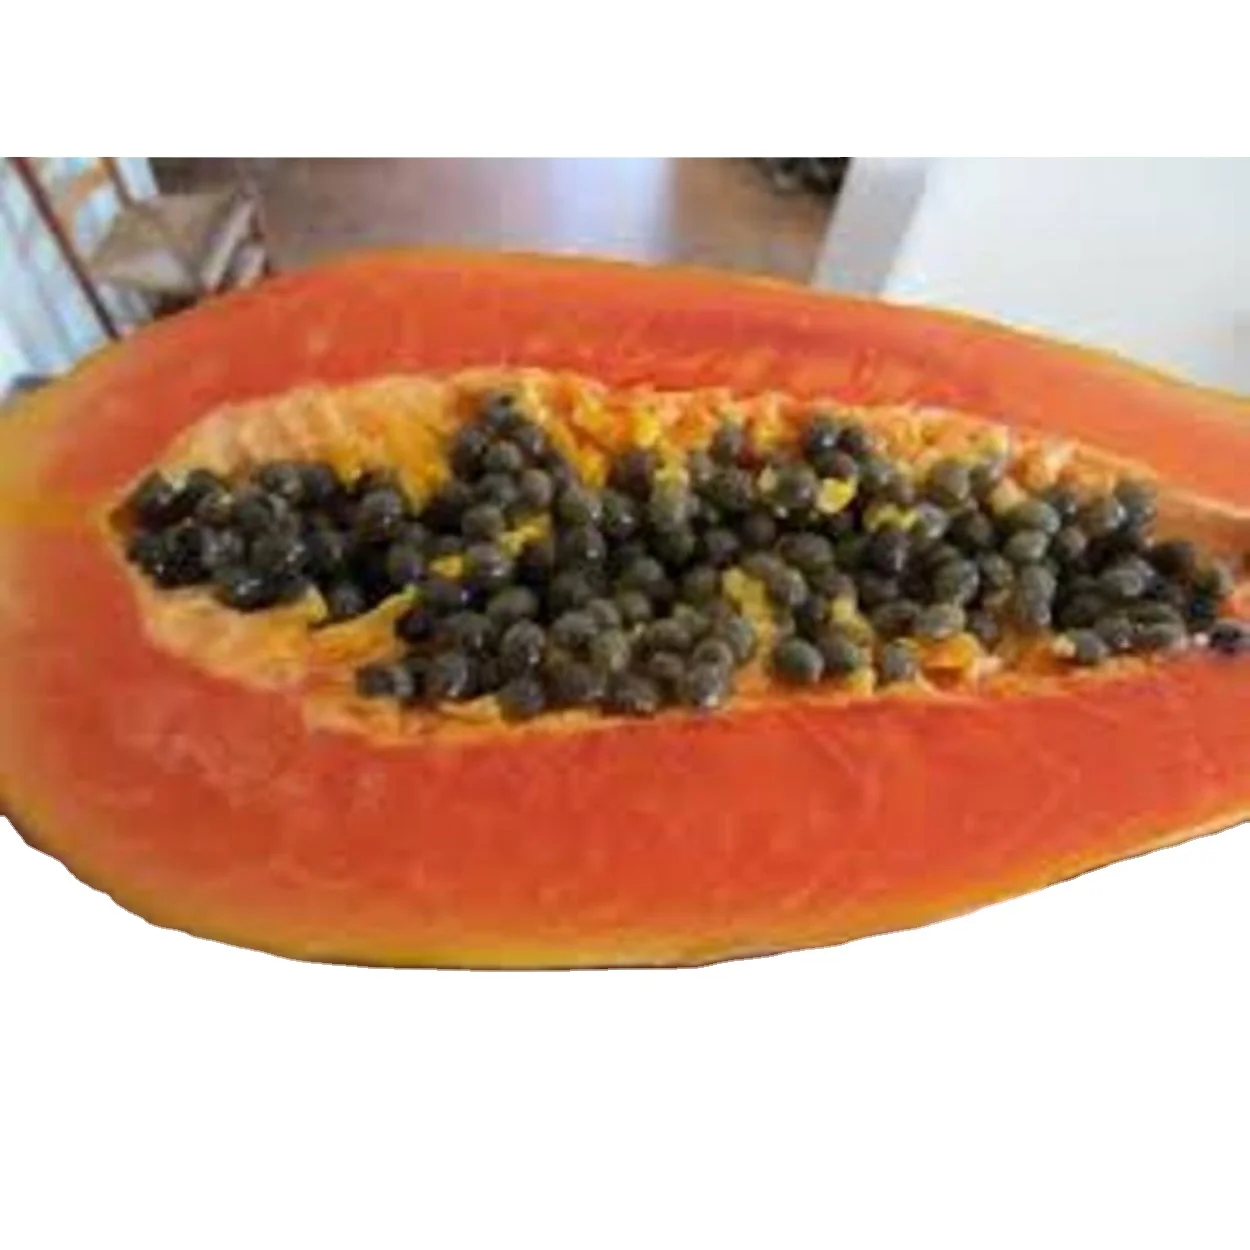 Online sale for Papaya Verities for nursery